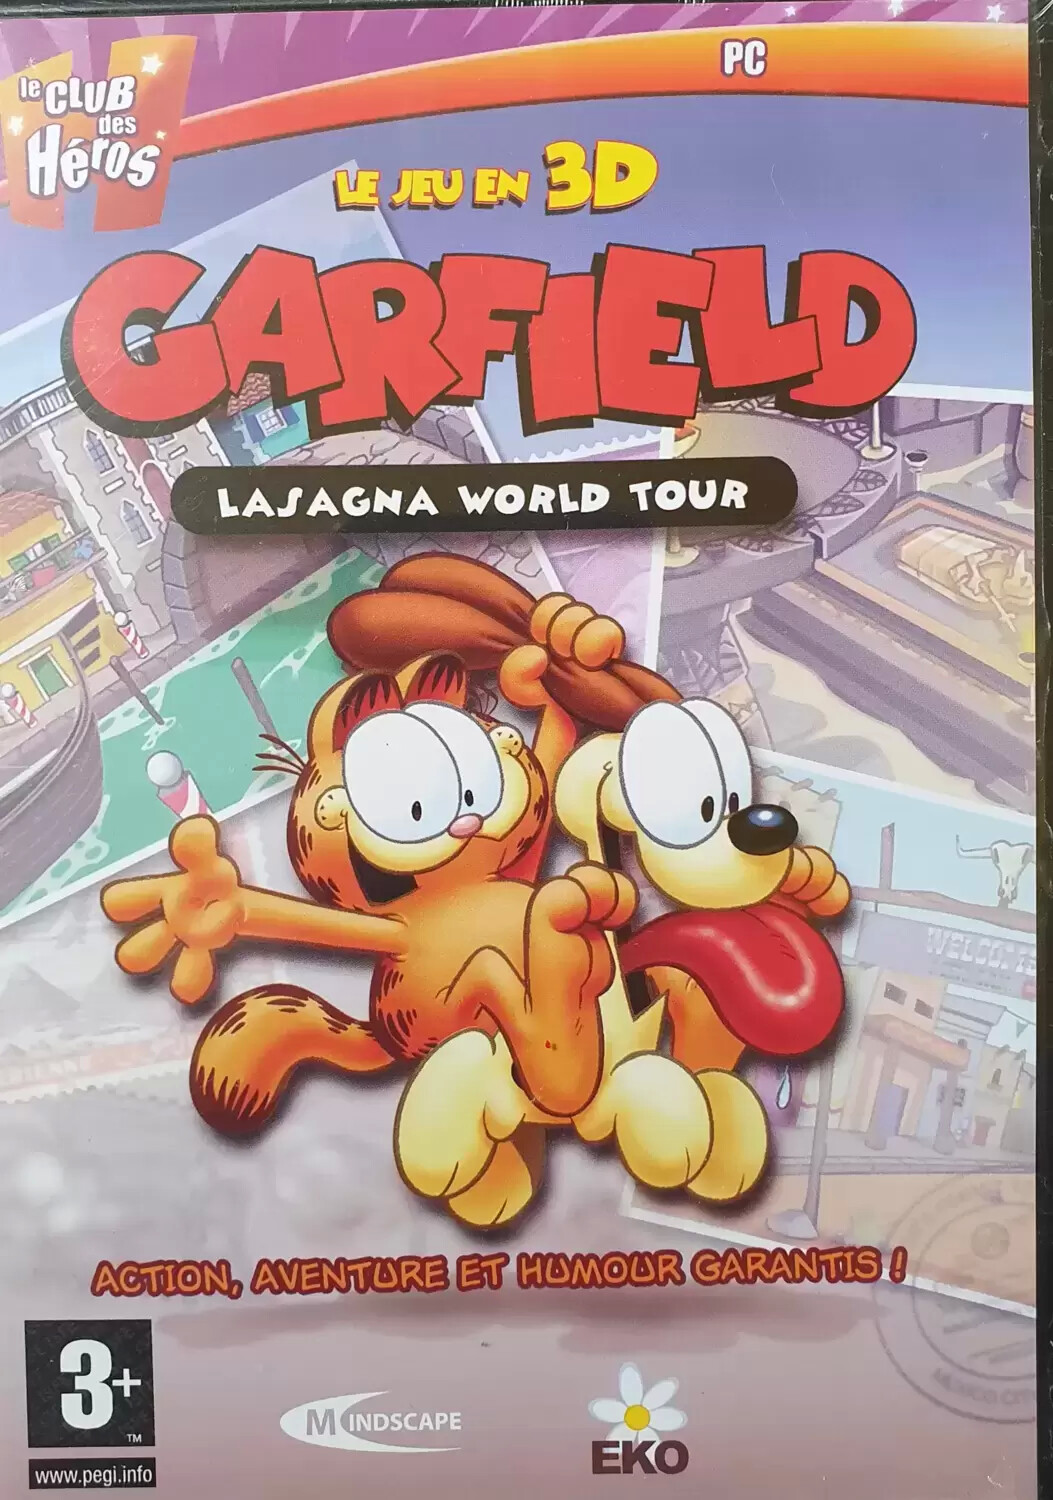 PC Games - Garfield - Lasagna World Tour